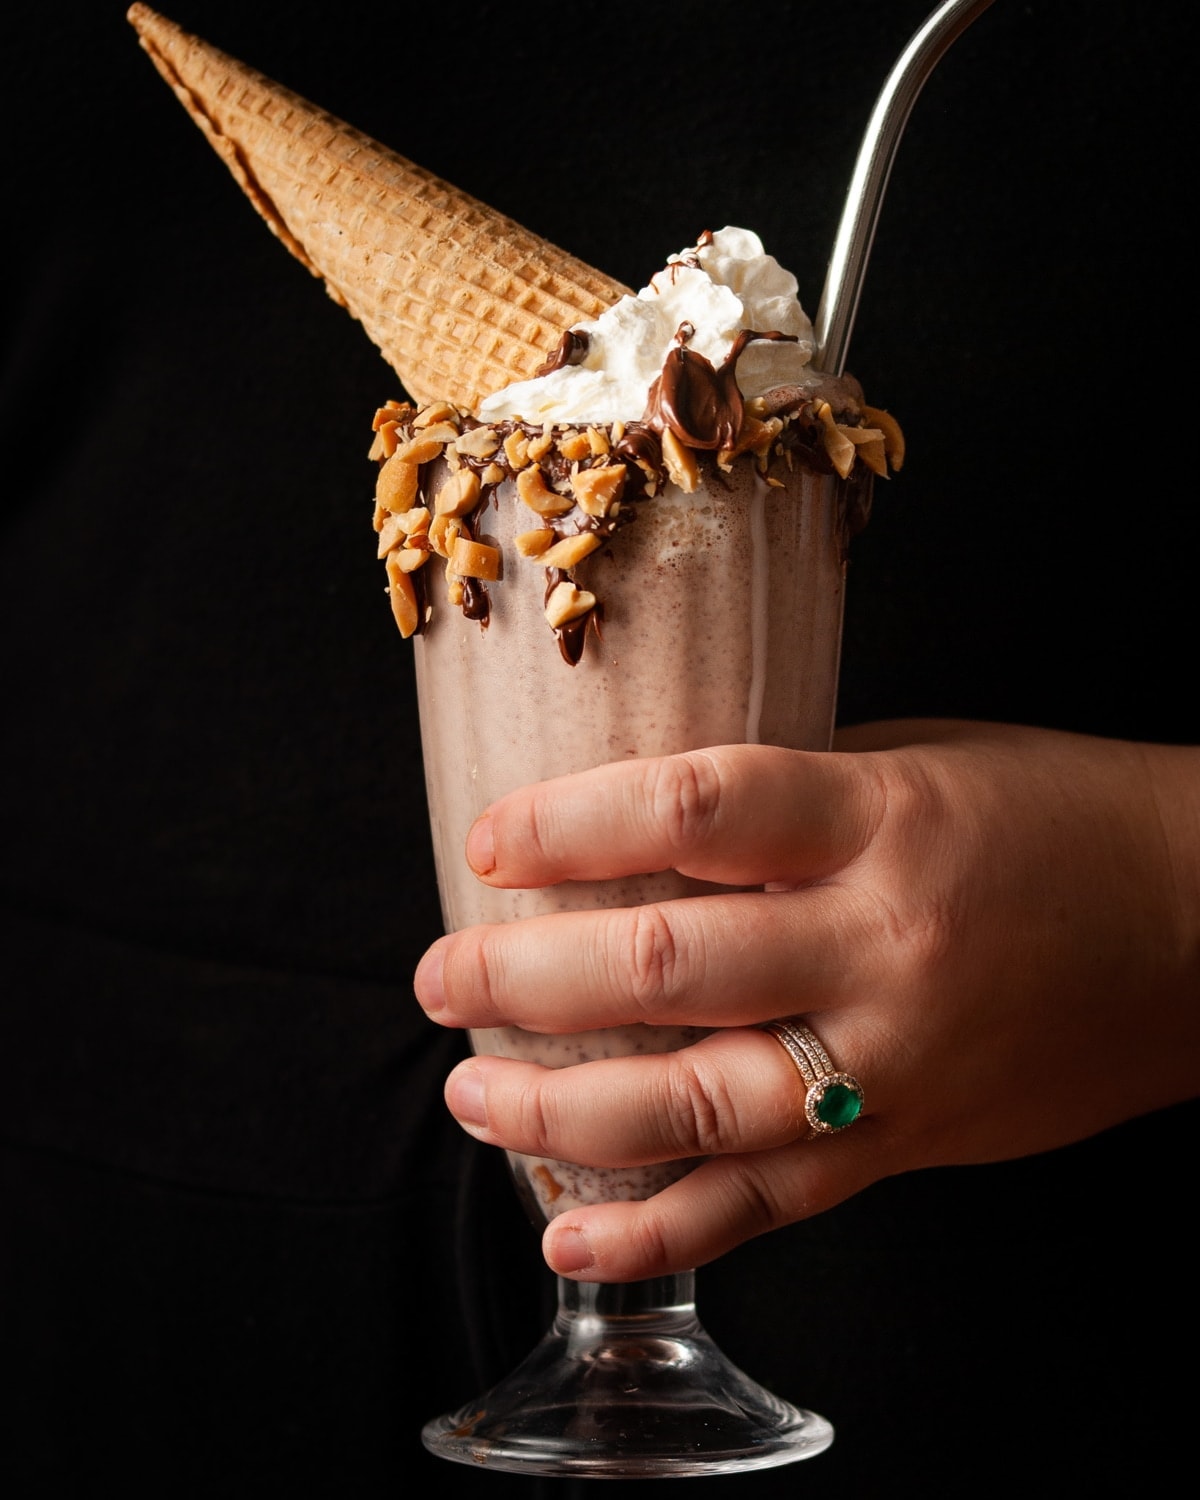 https://marleysmenu.com/wp-content/uploads/2021/07/Nutella-Milkshake-Featured-Image.jpg